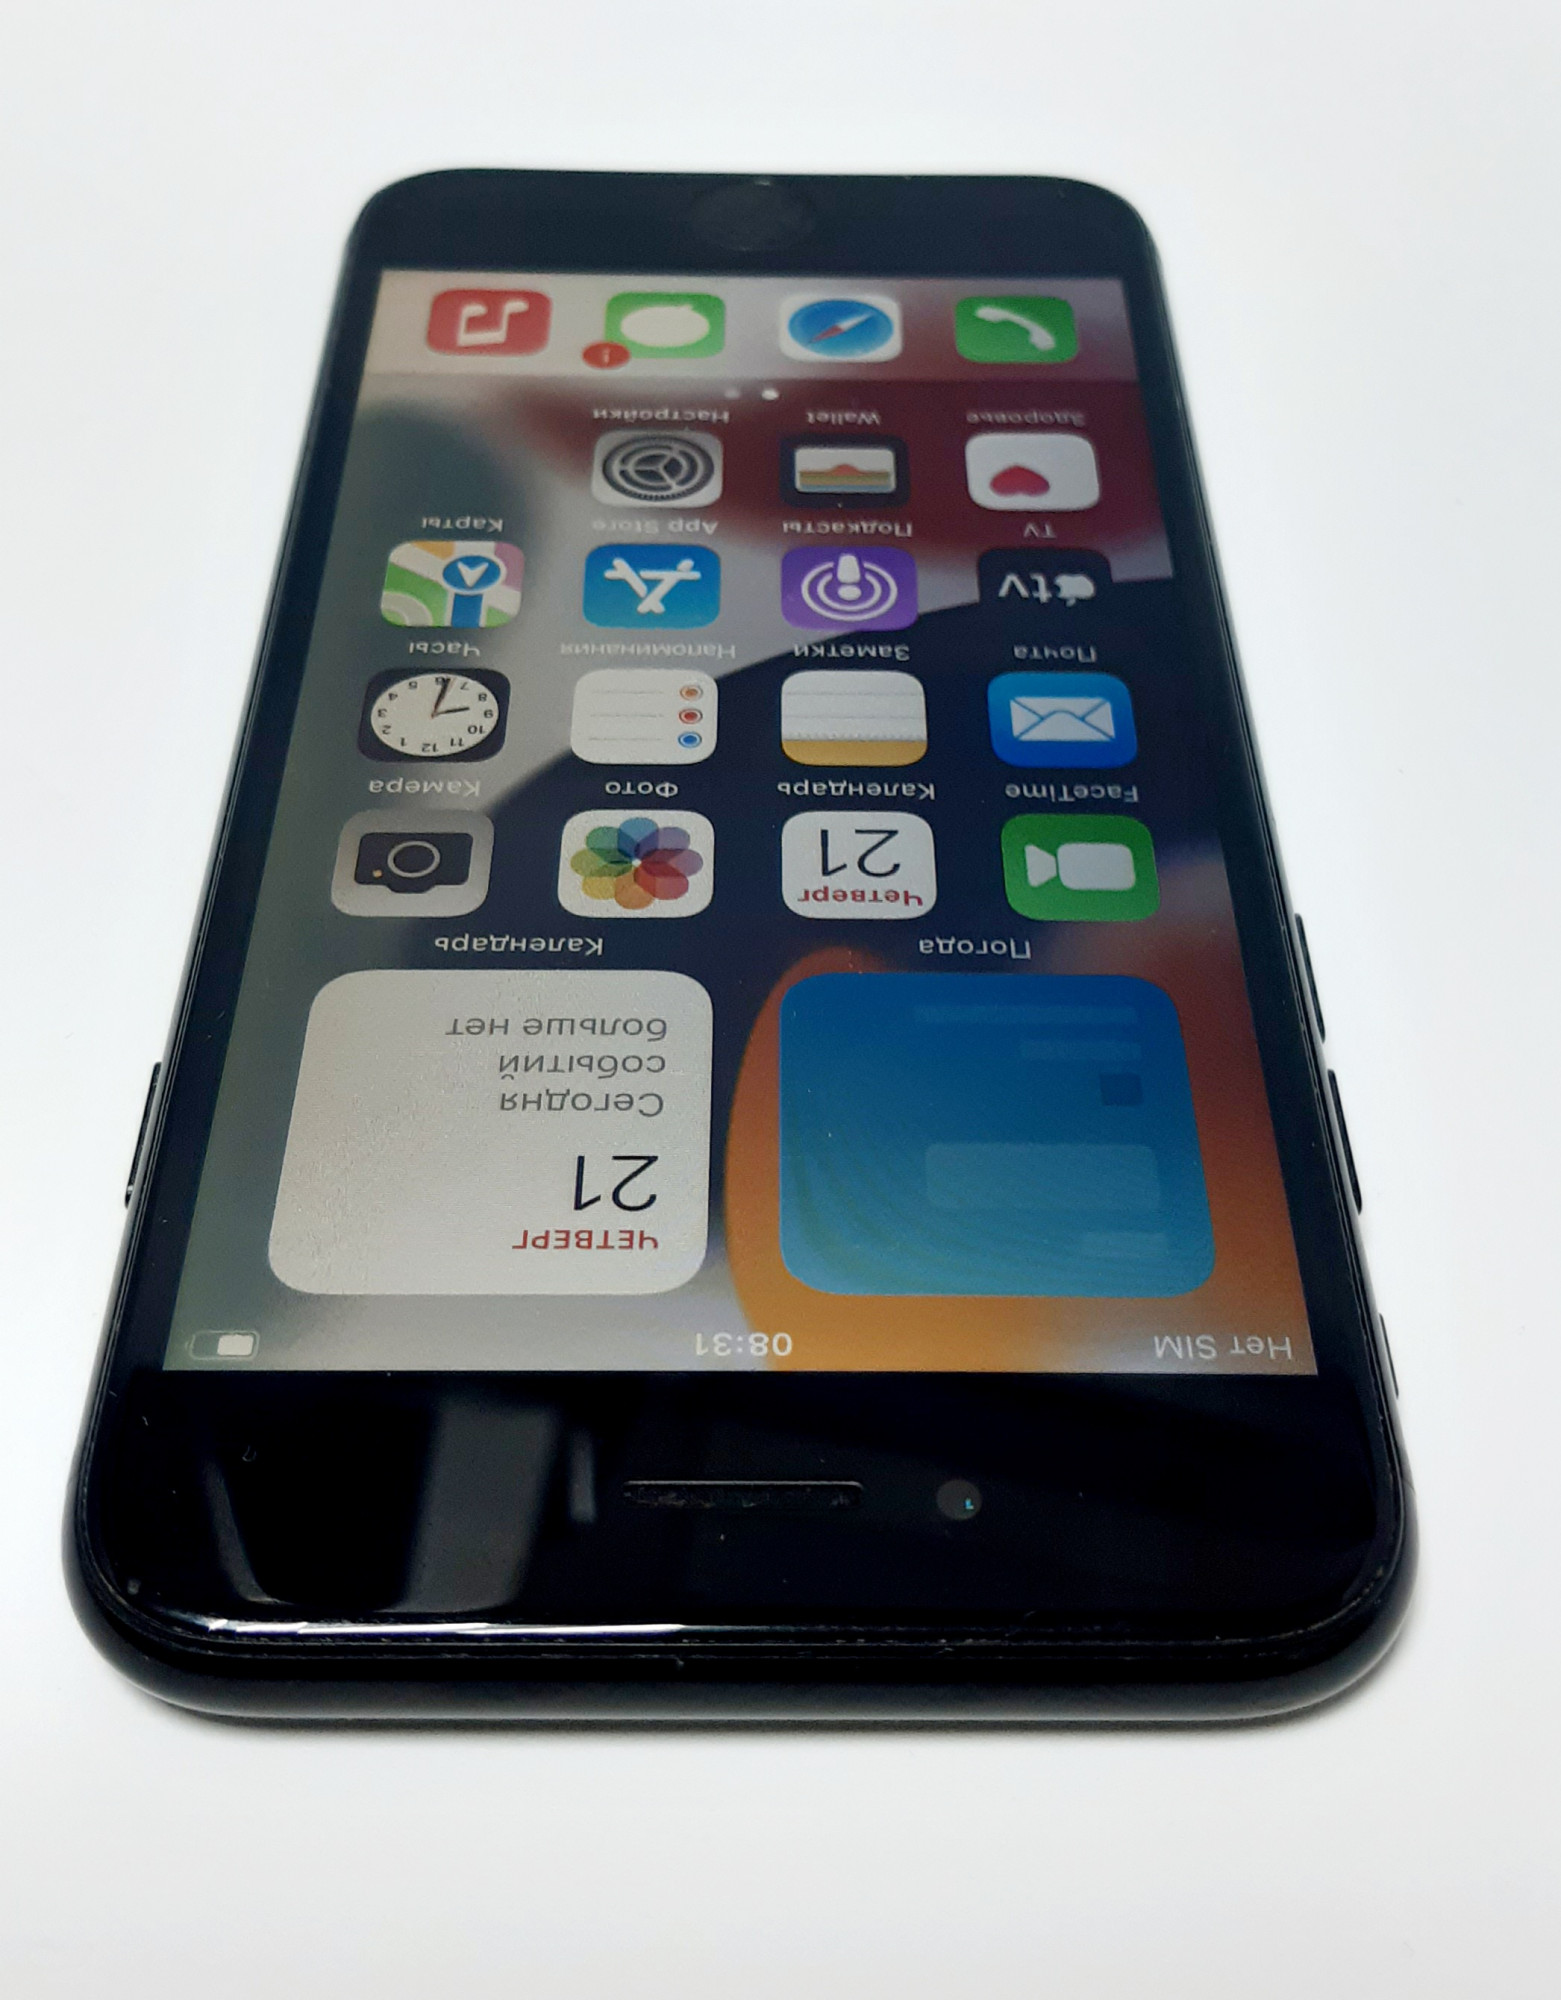 Apple iPhone 7 32Gb Black  4